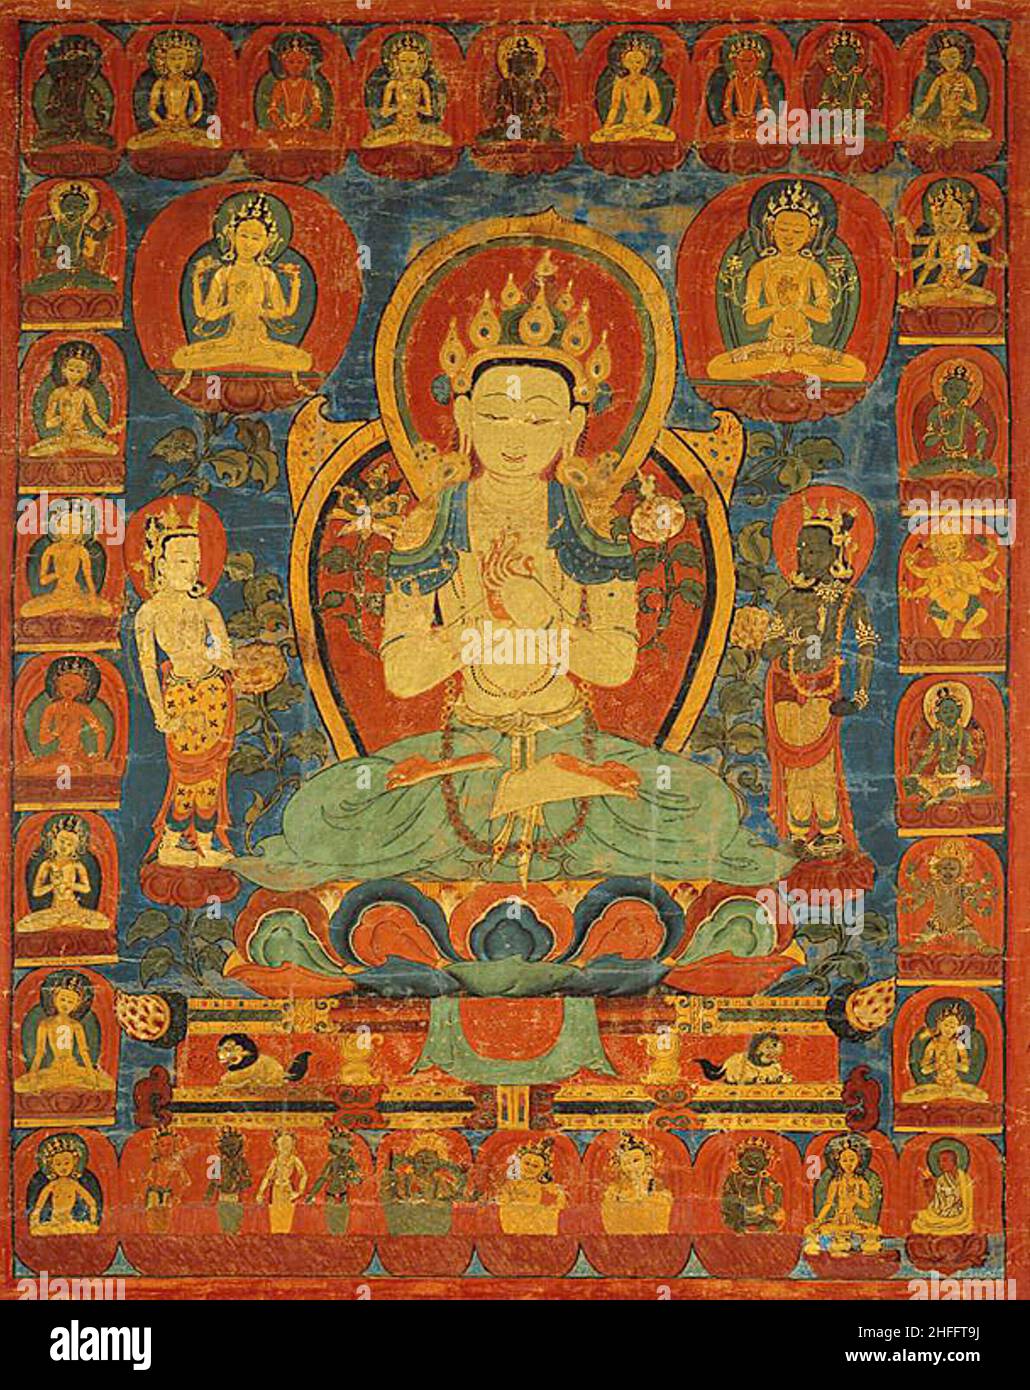 Painted Banner (Thangka) of Bodhisattva Maitreya Surrounded by his Retinue, 16th century. Stock Photo